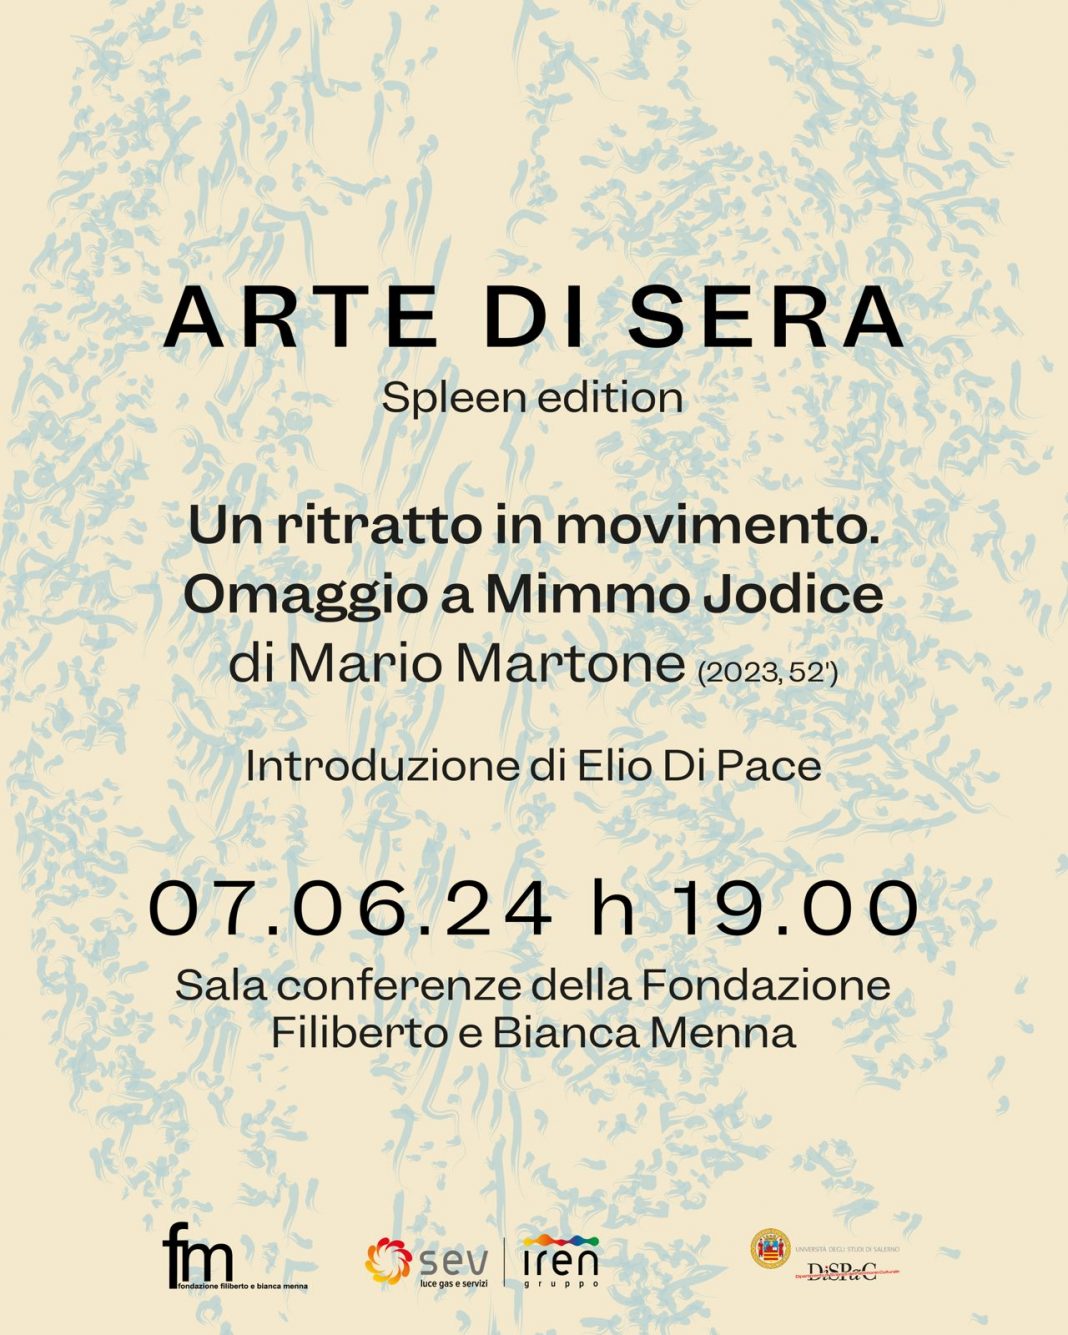 JODICE / MARTONE – Arte di serahttps://www.exibart.com/repository/media/formidable/11/img/f93/Locandina-Arte-di-sera-spleen-edition-7giugno-1068x1335.jpeg